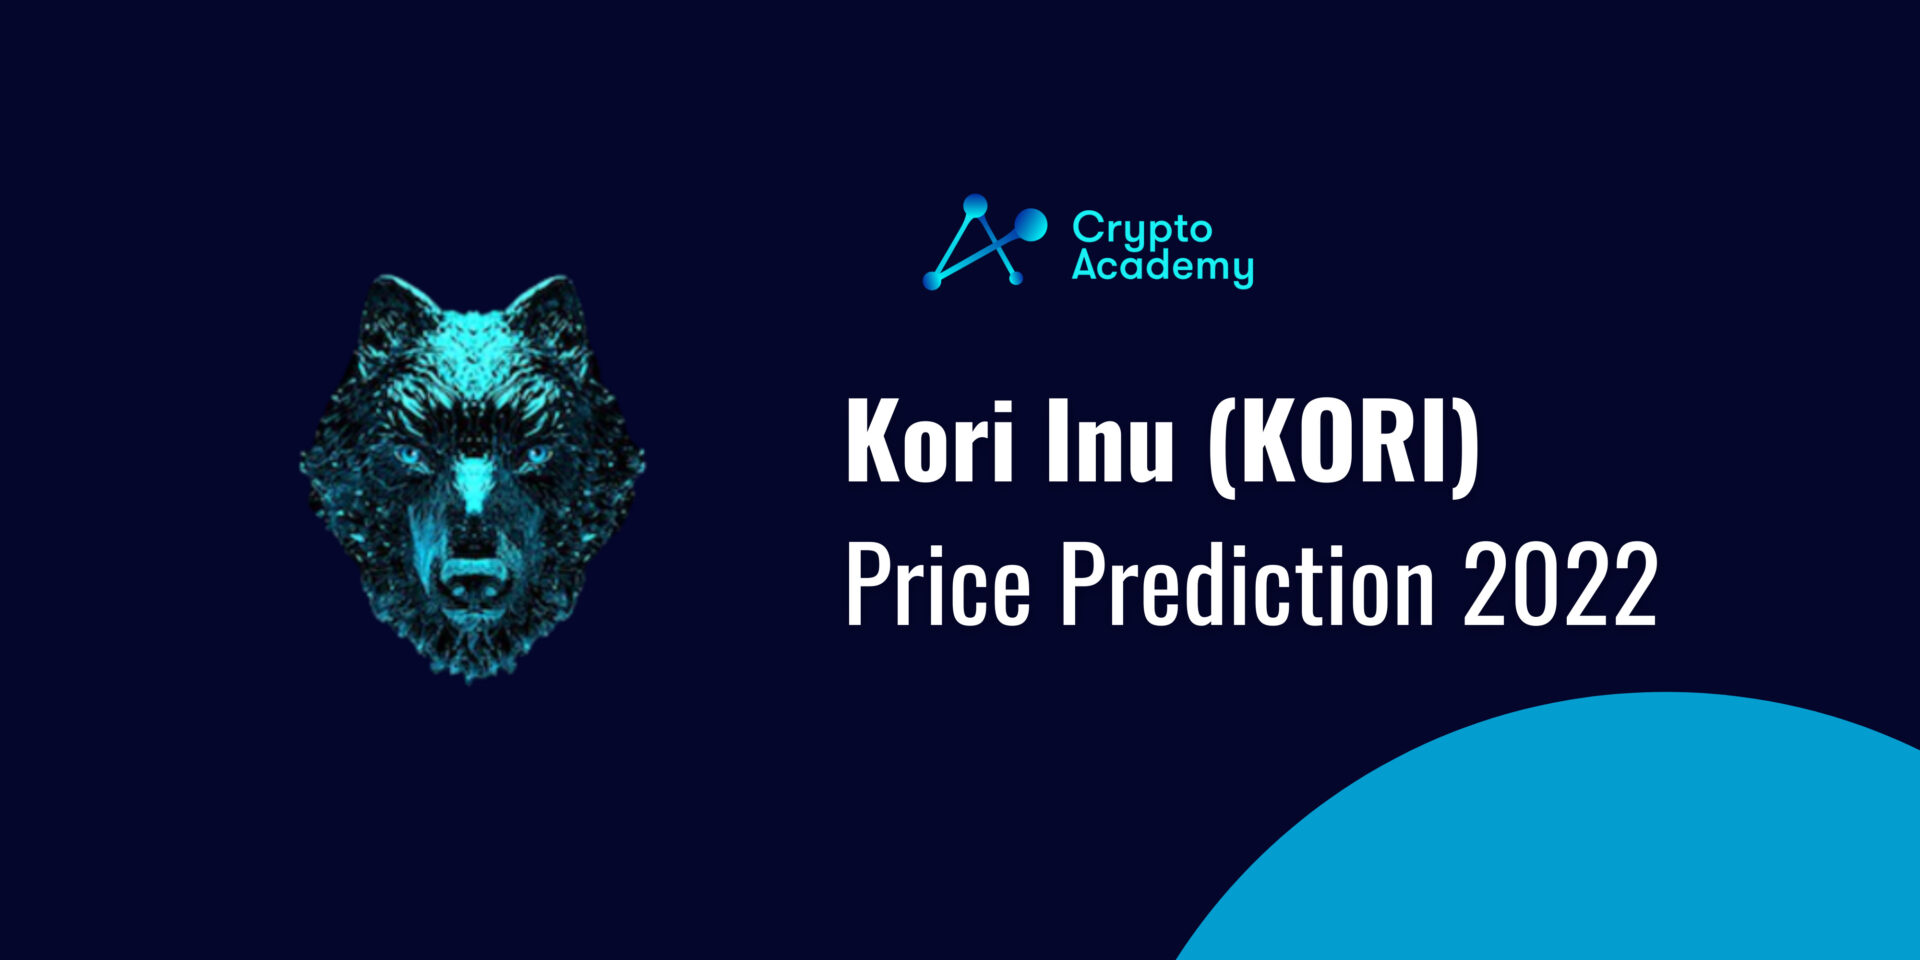 Kori Inu Price Prediction 2022 and Beyond – Could KORI Eventually Reach $1?